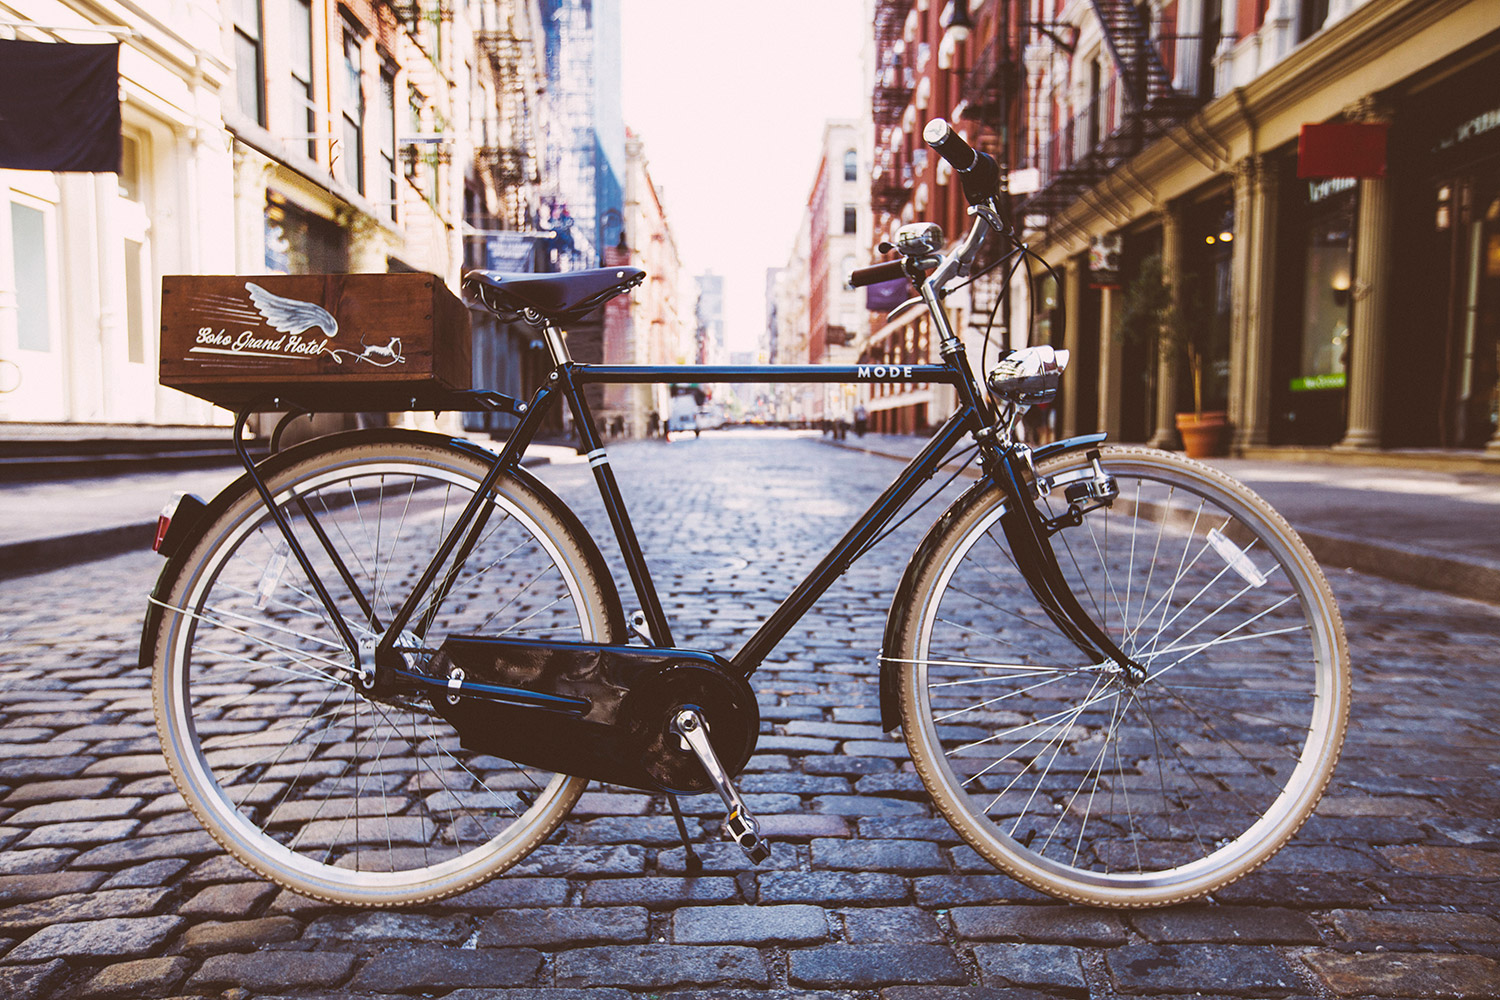 A Soho Grand branded bike is posed on a cobblestone SoHo street